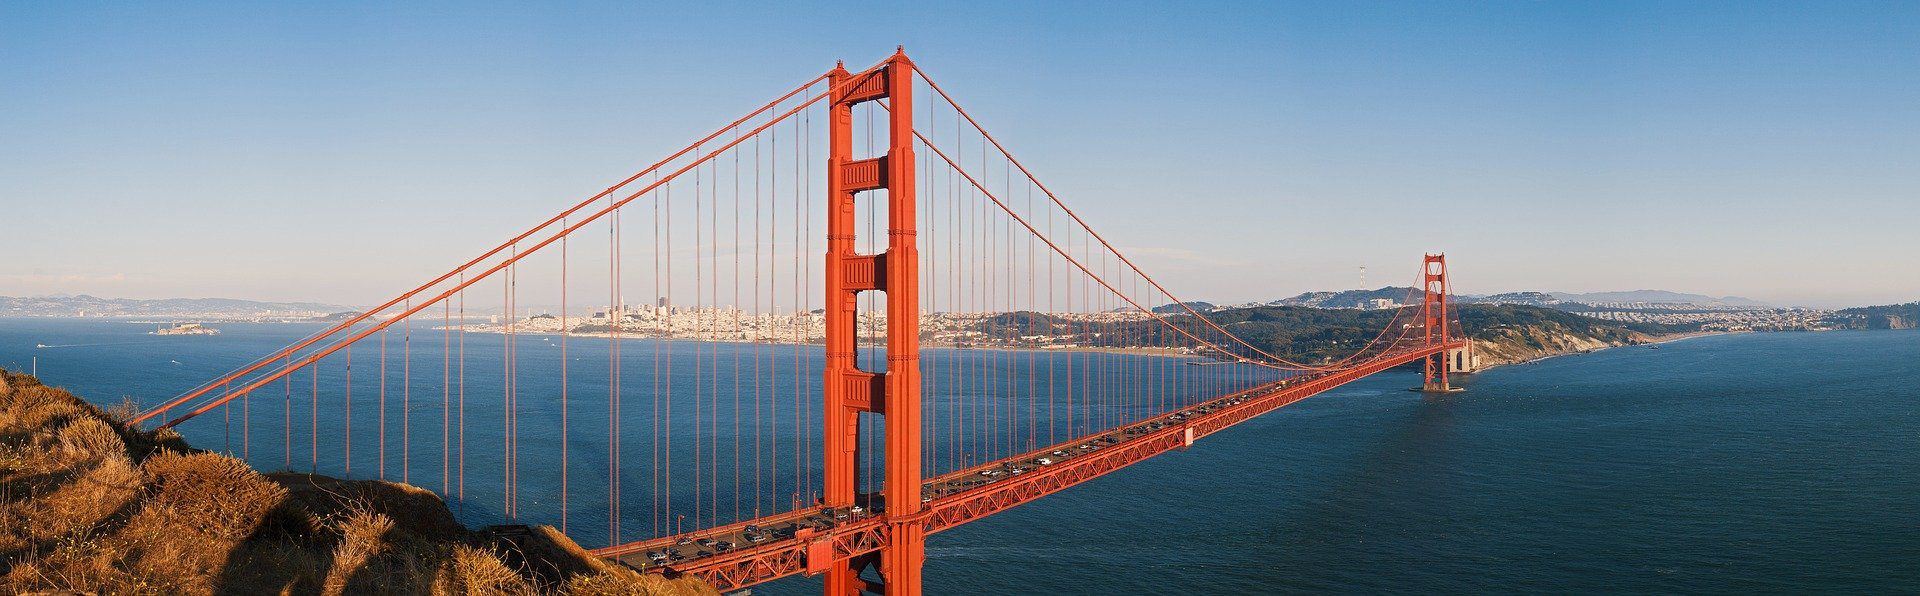 Golden Gate Bridge view from Marin Headlands